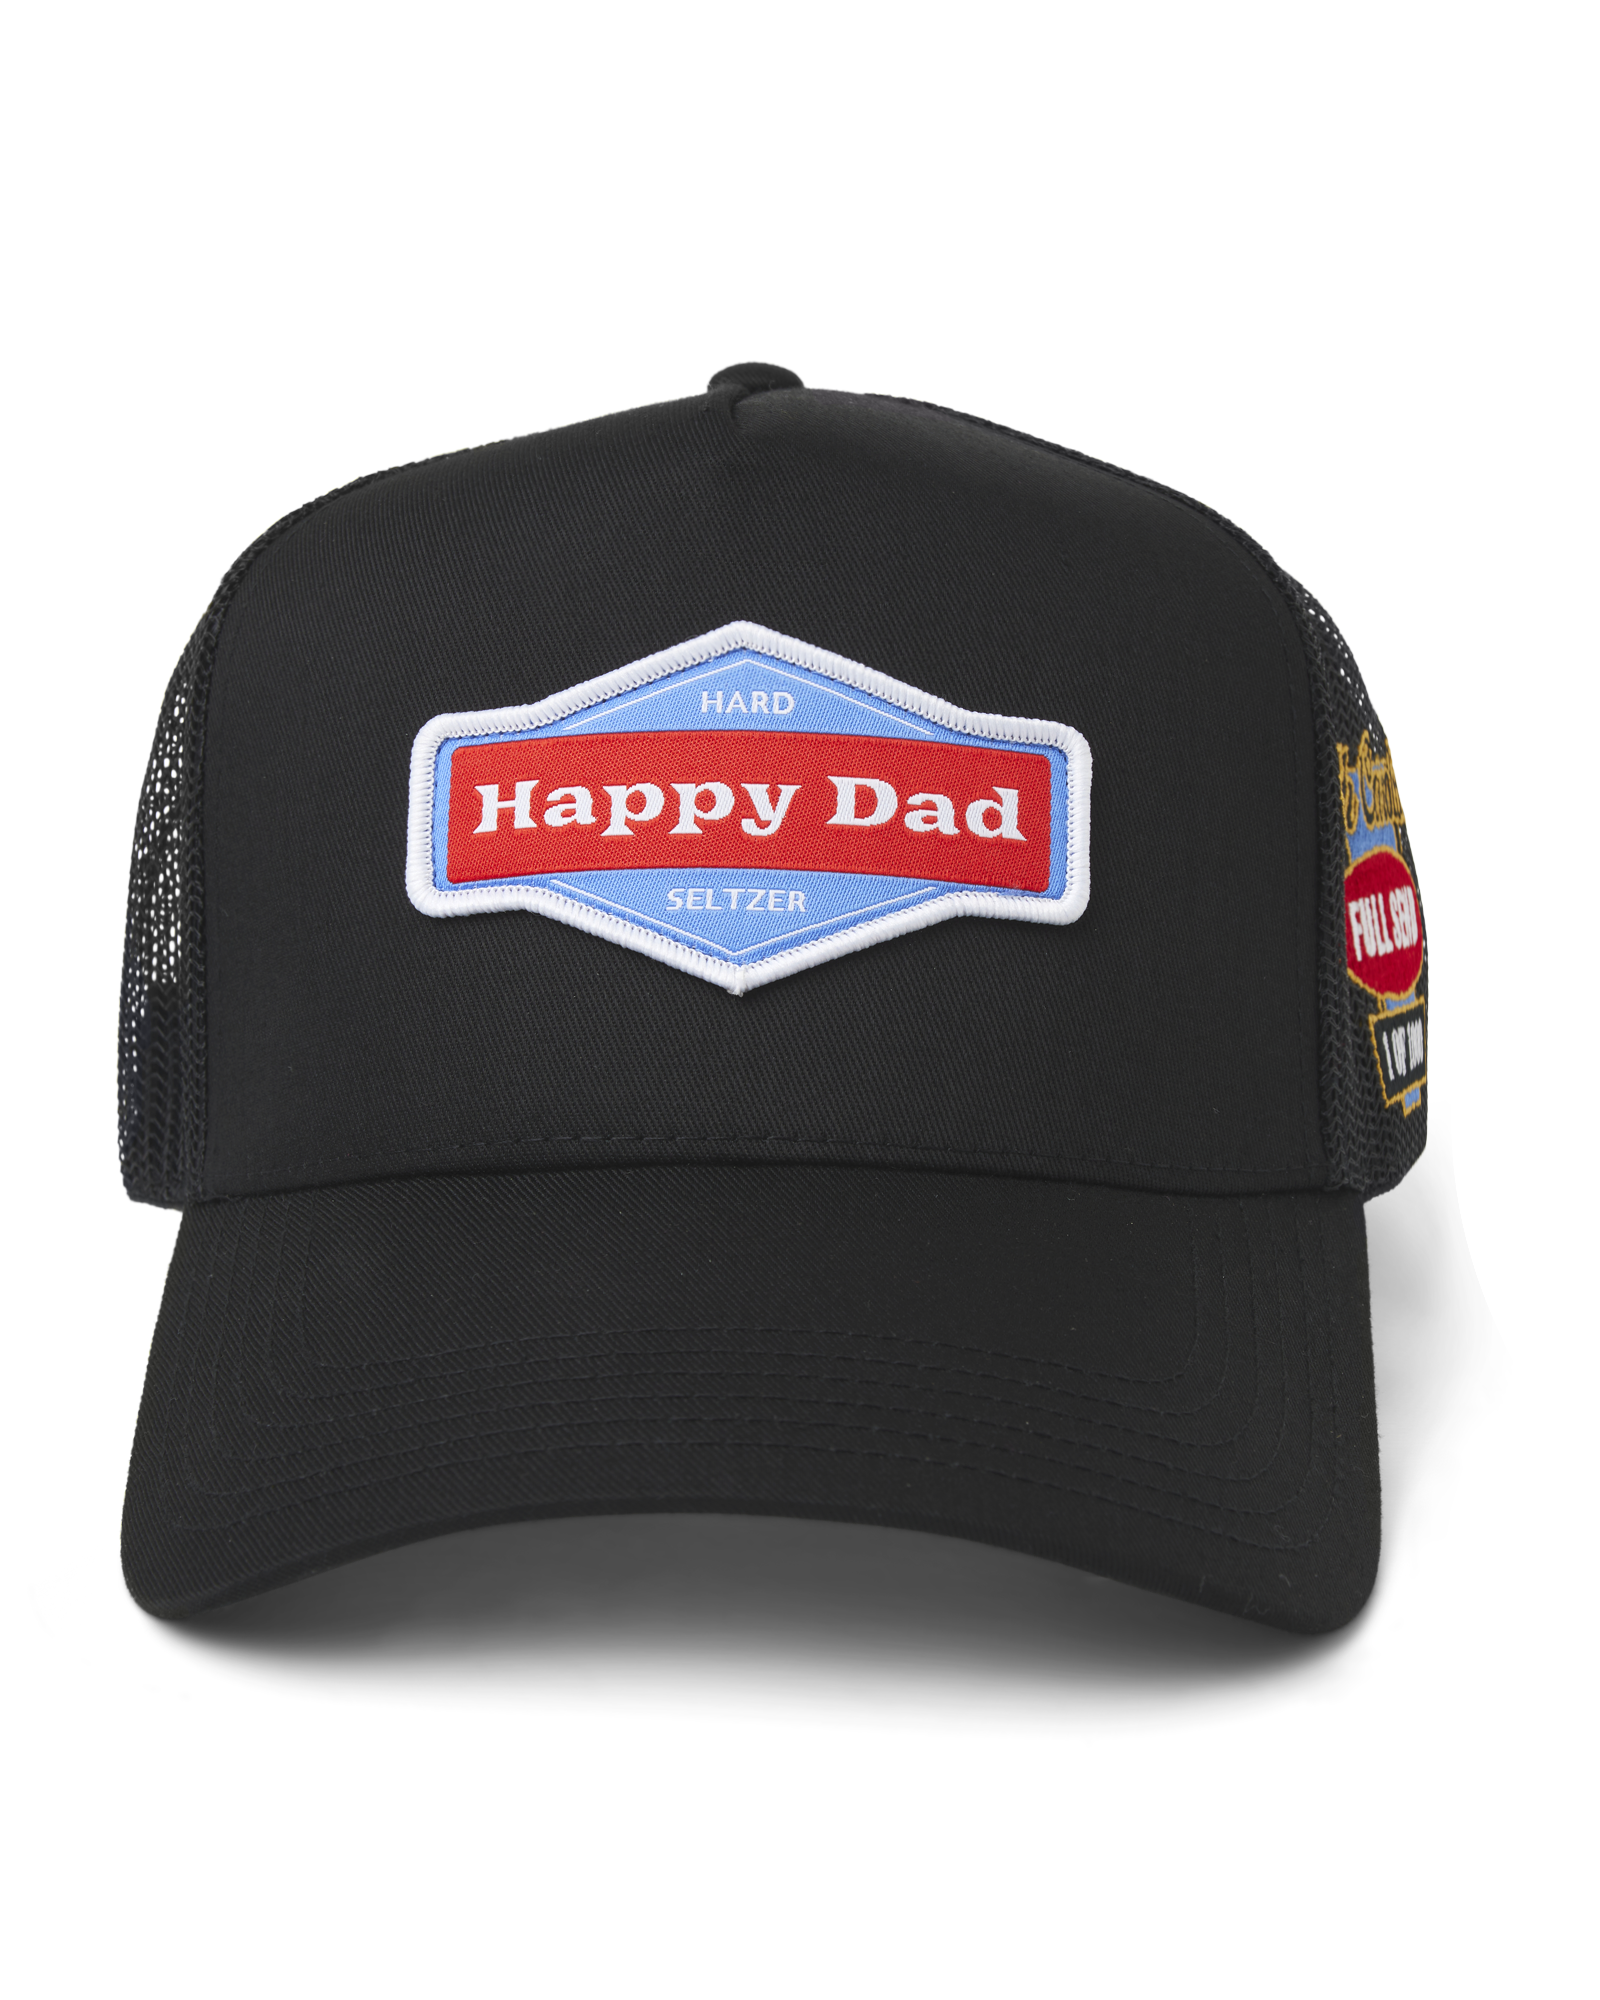 (Limited) Michigan - Happy Dad State Trucker Hat 1 of 1000